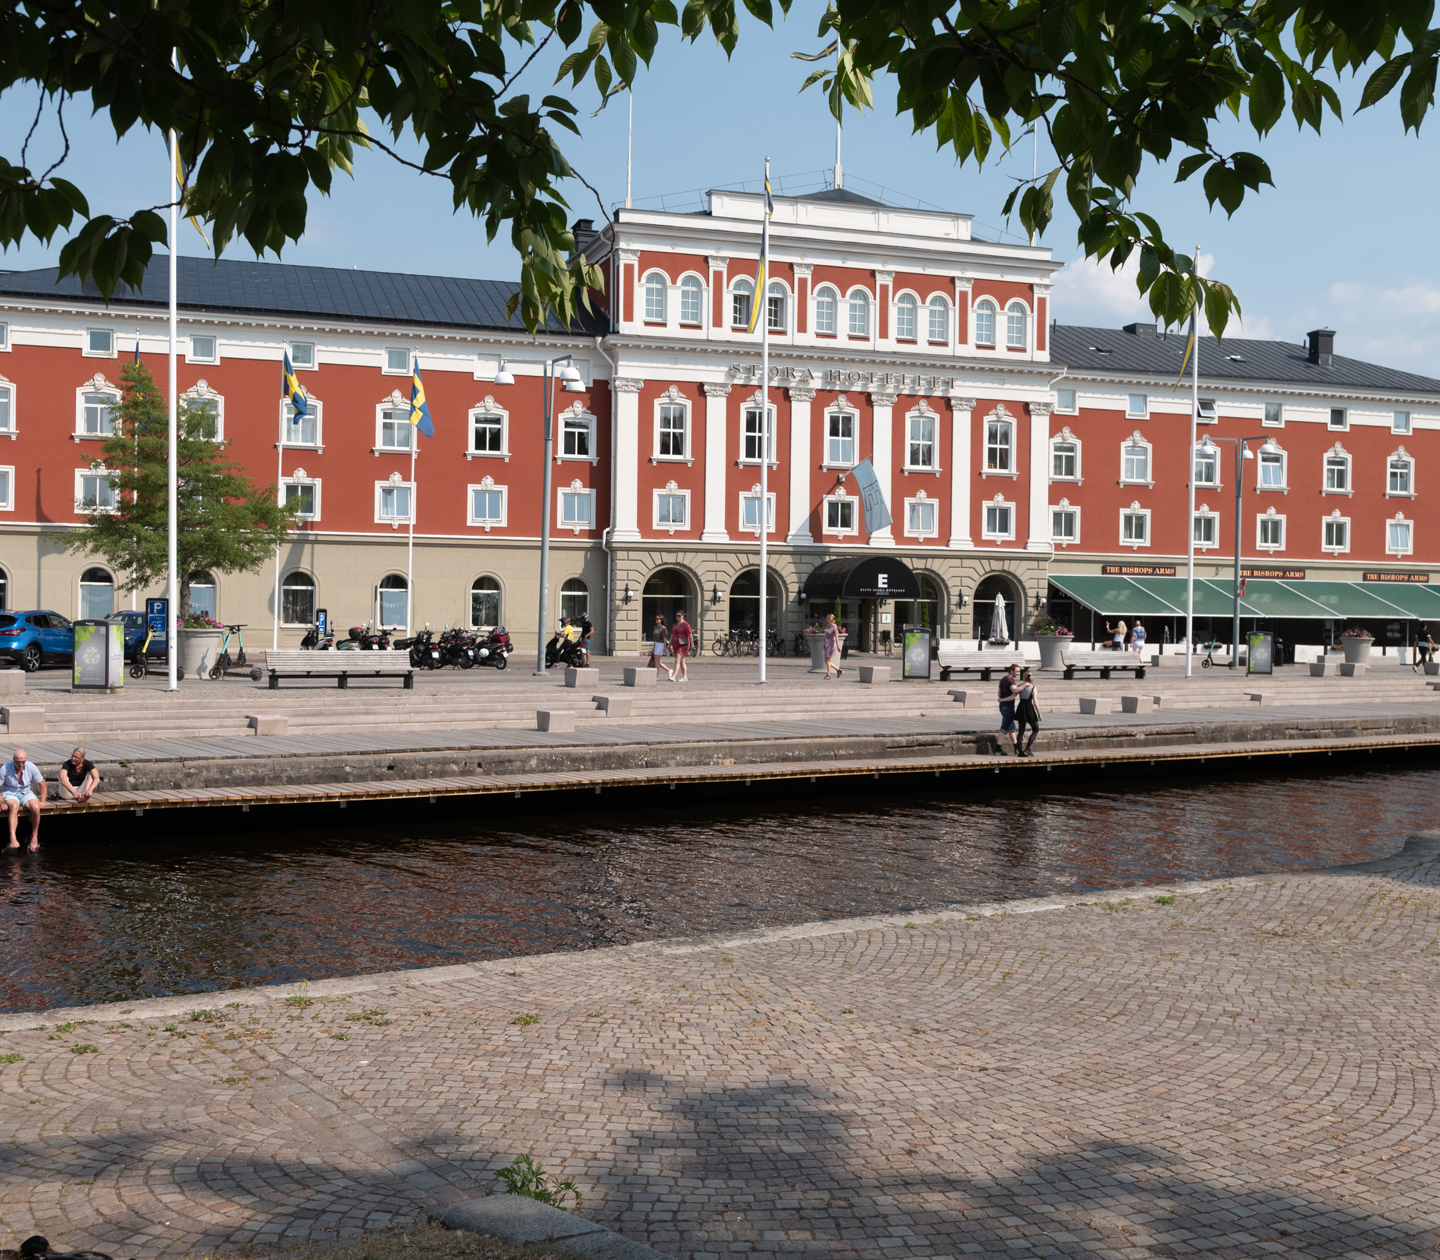 The facade of Elite Stora Hotellet in Jönköping